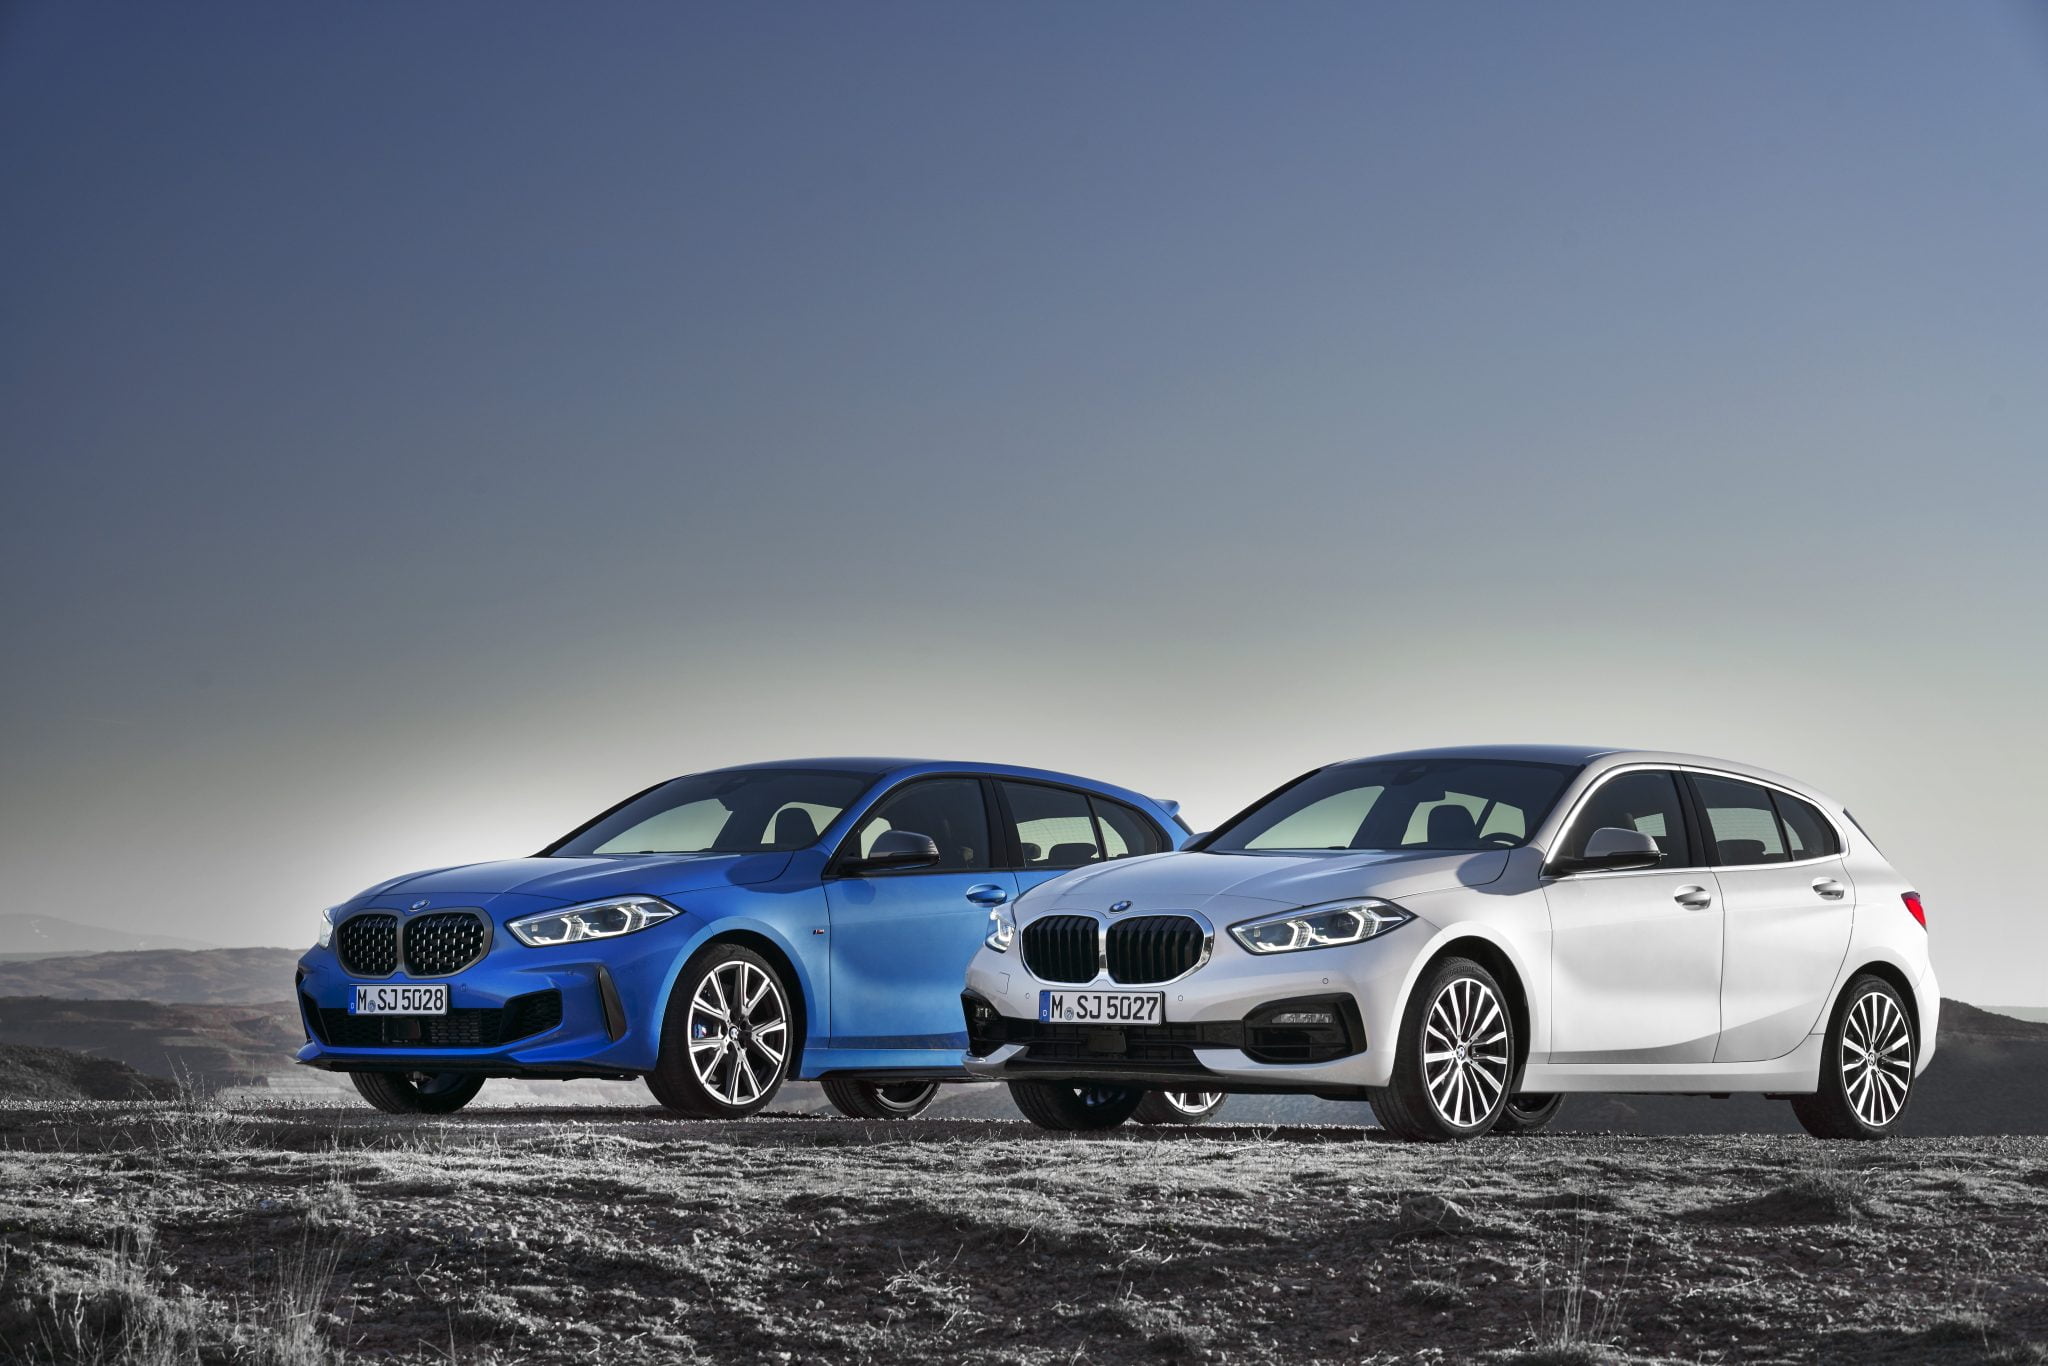 Litros de gasolina en BMW Serie 1: ¿cuántos son?